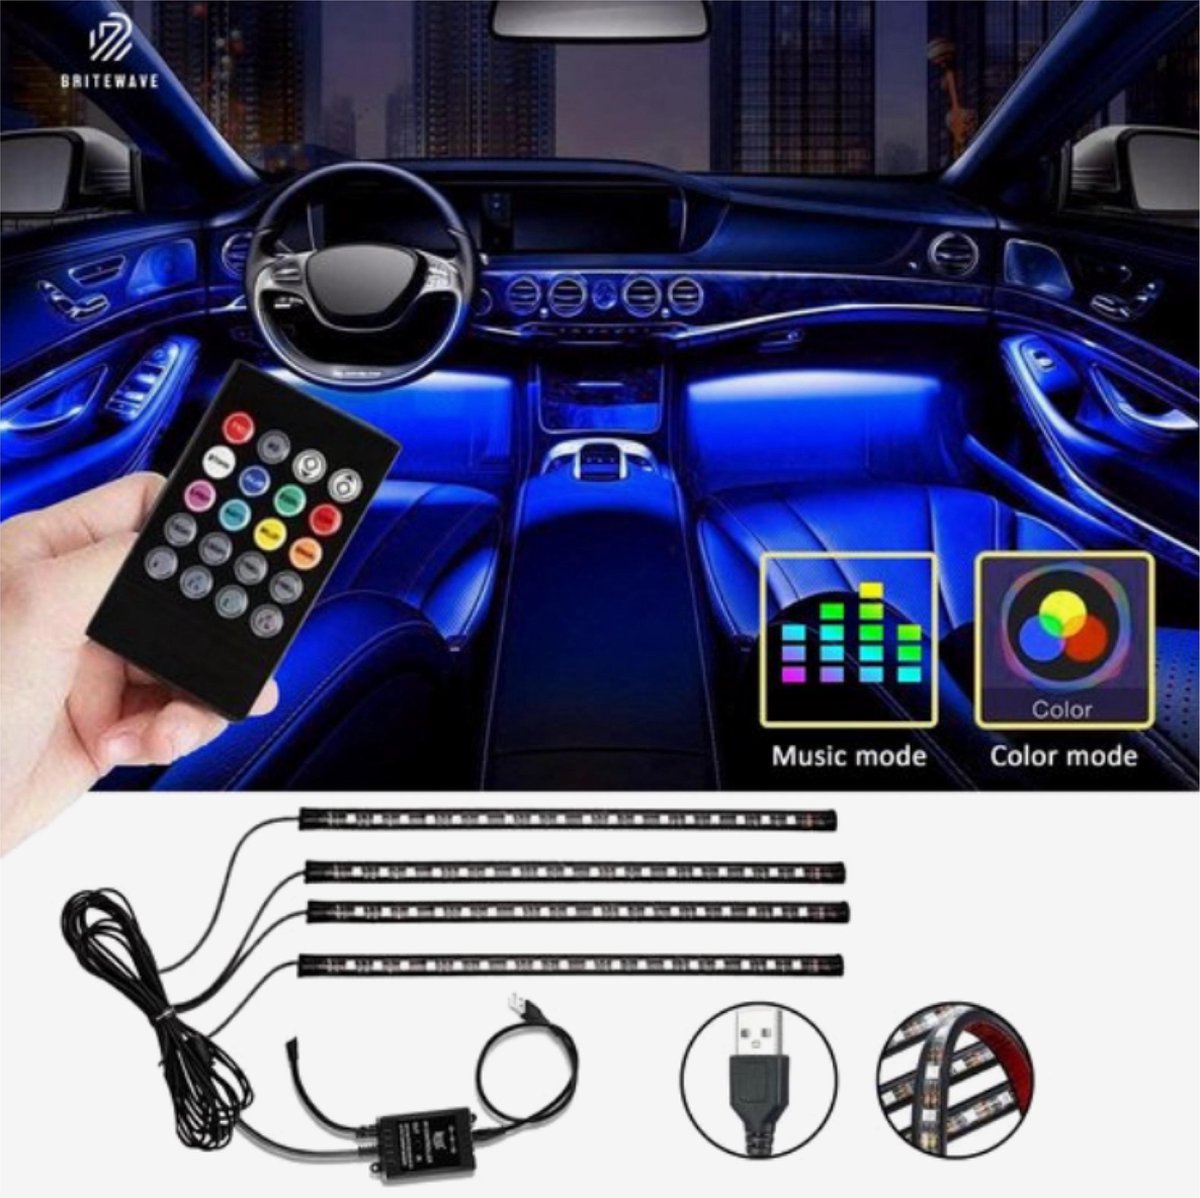 Kit ruban led 12v RGB special Tuning Auto intérieur - Deco Led